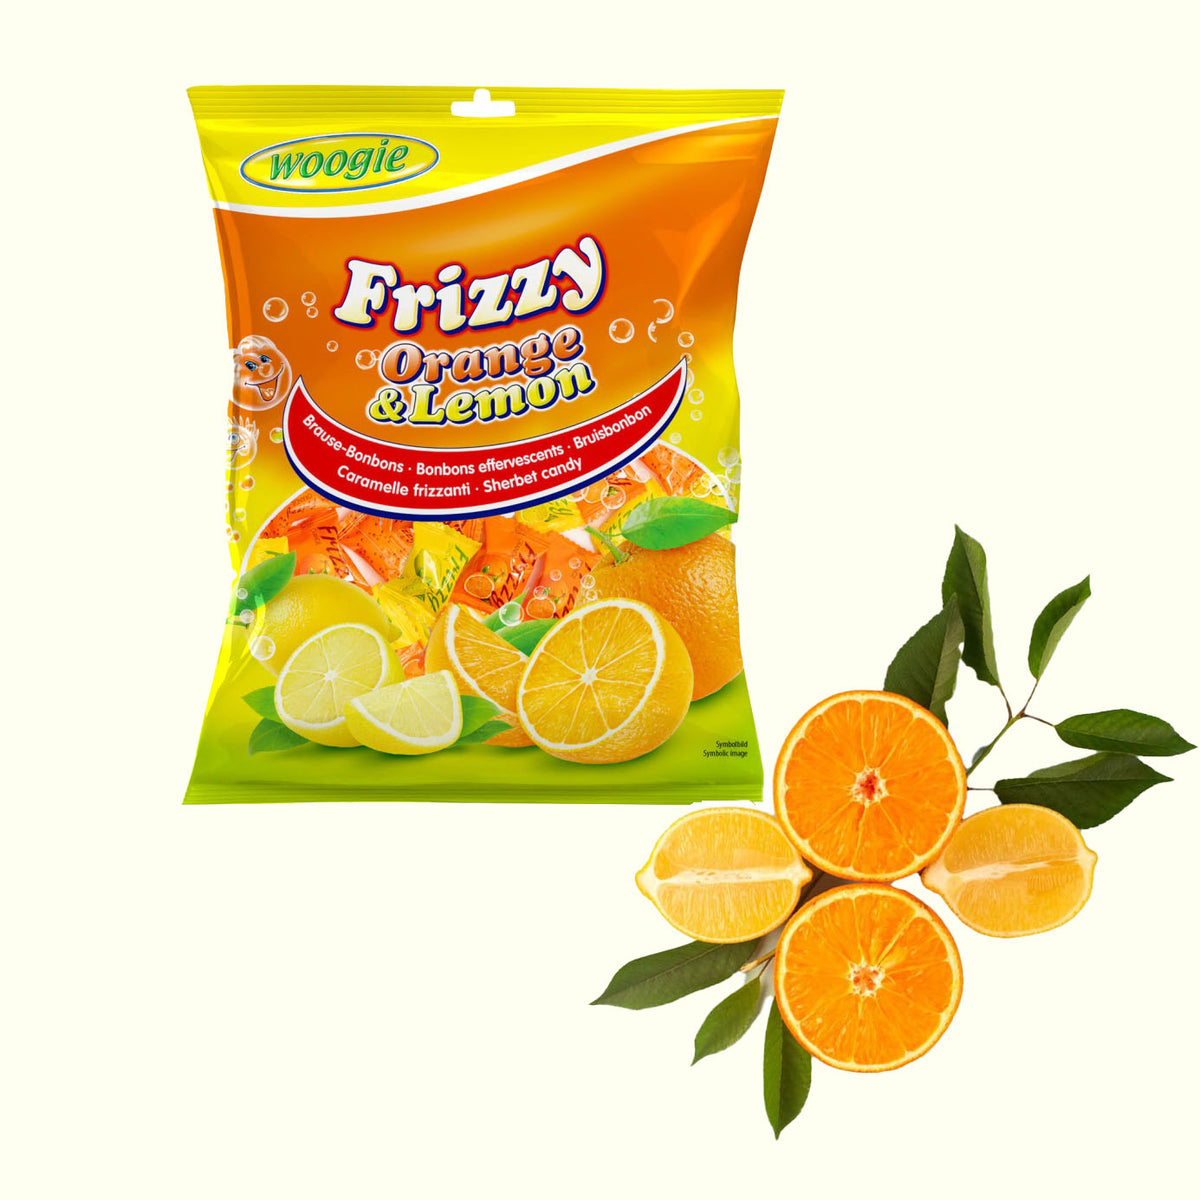 Woogie Frizzy Orange & Lemon Brausefüllung 170g